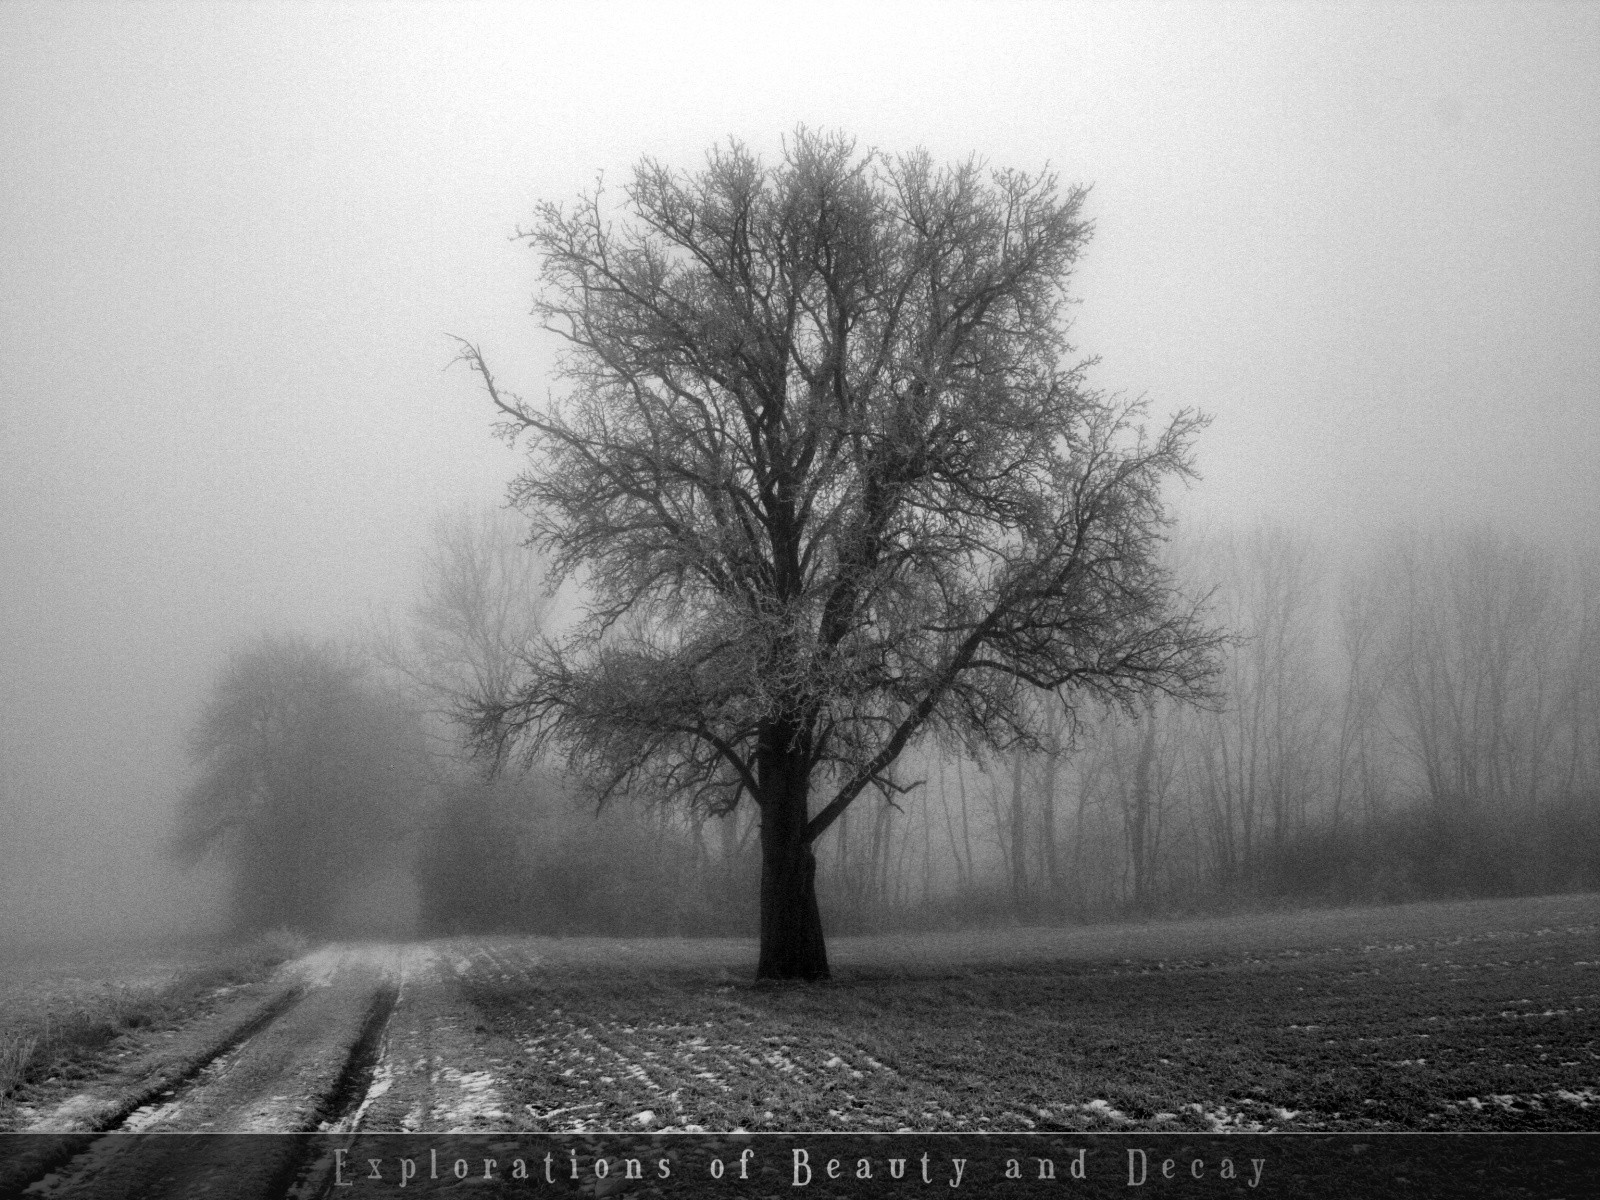 General 1600x1200 trees monochrome mist field outdoors overcast gloomy